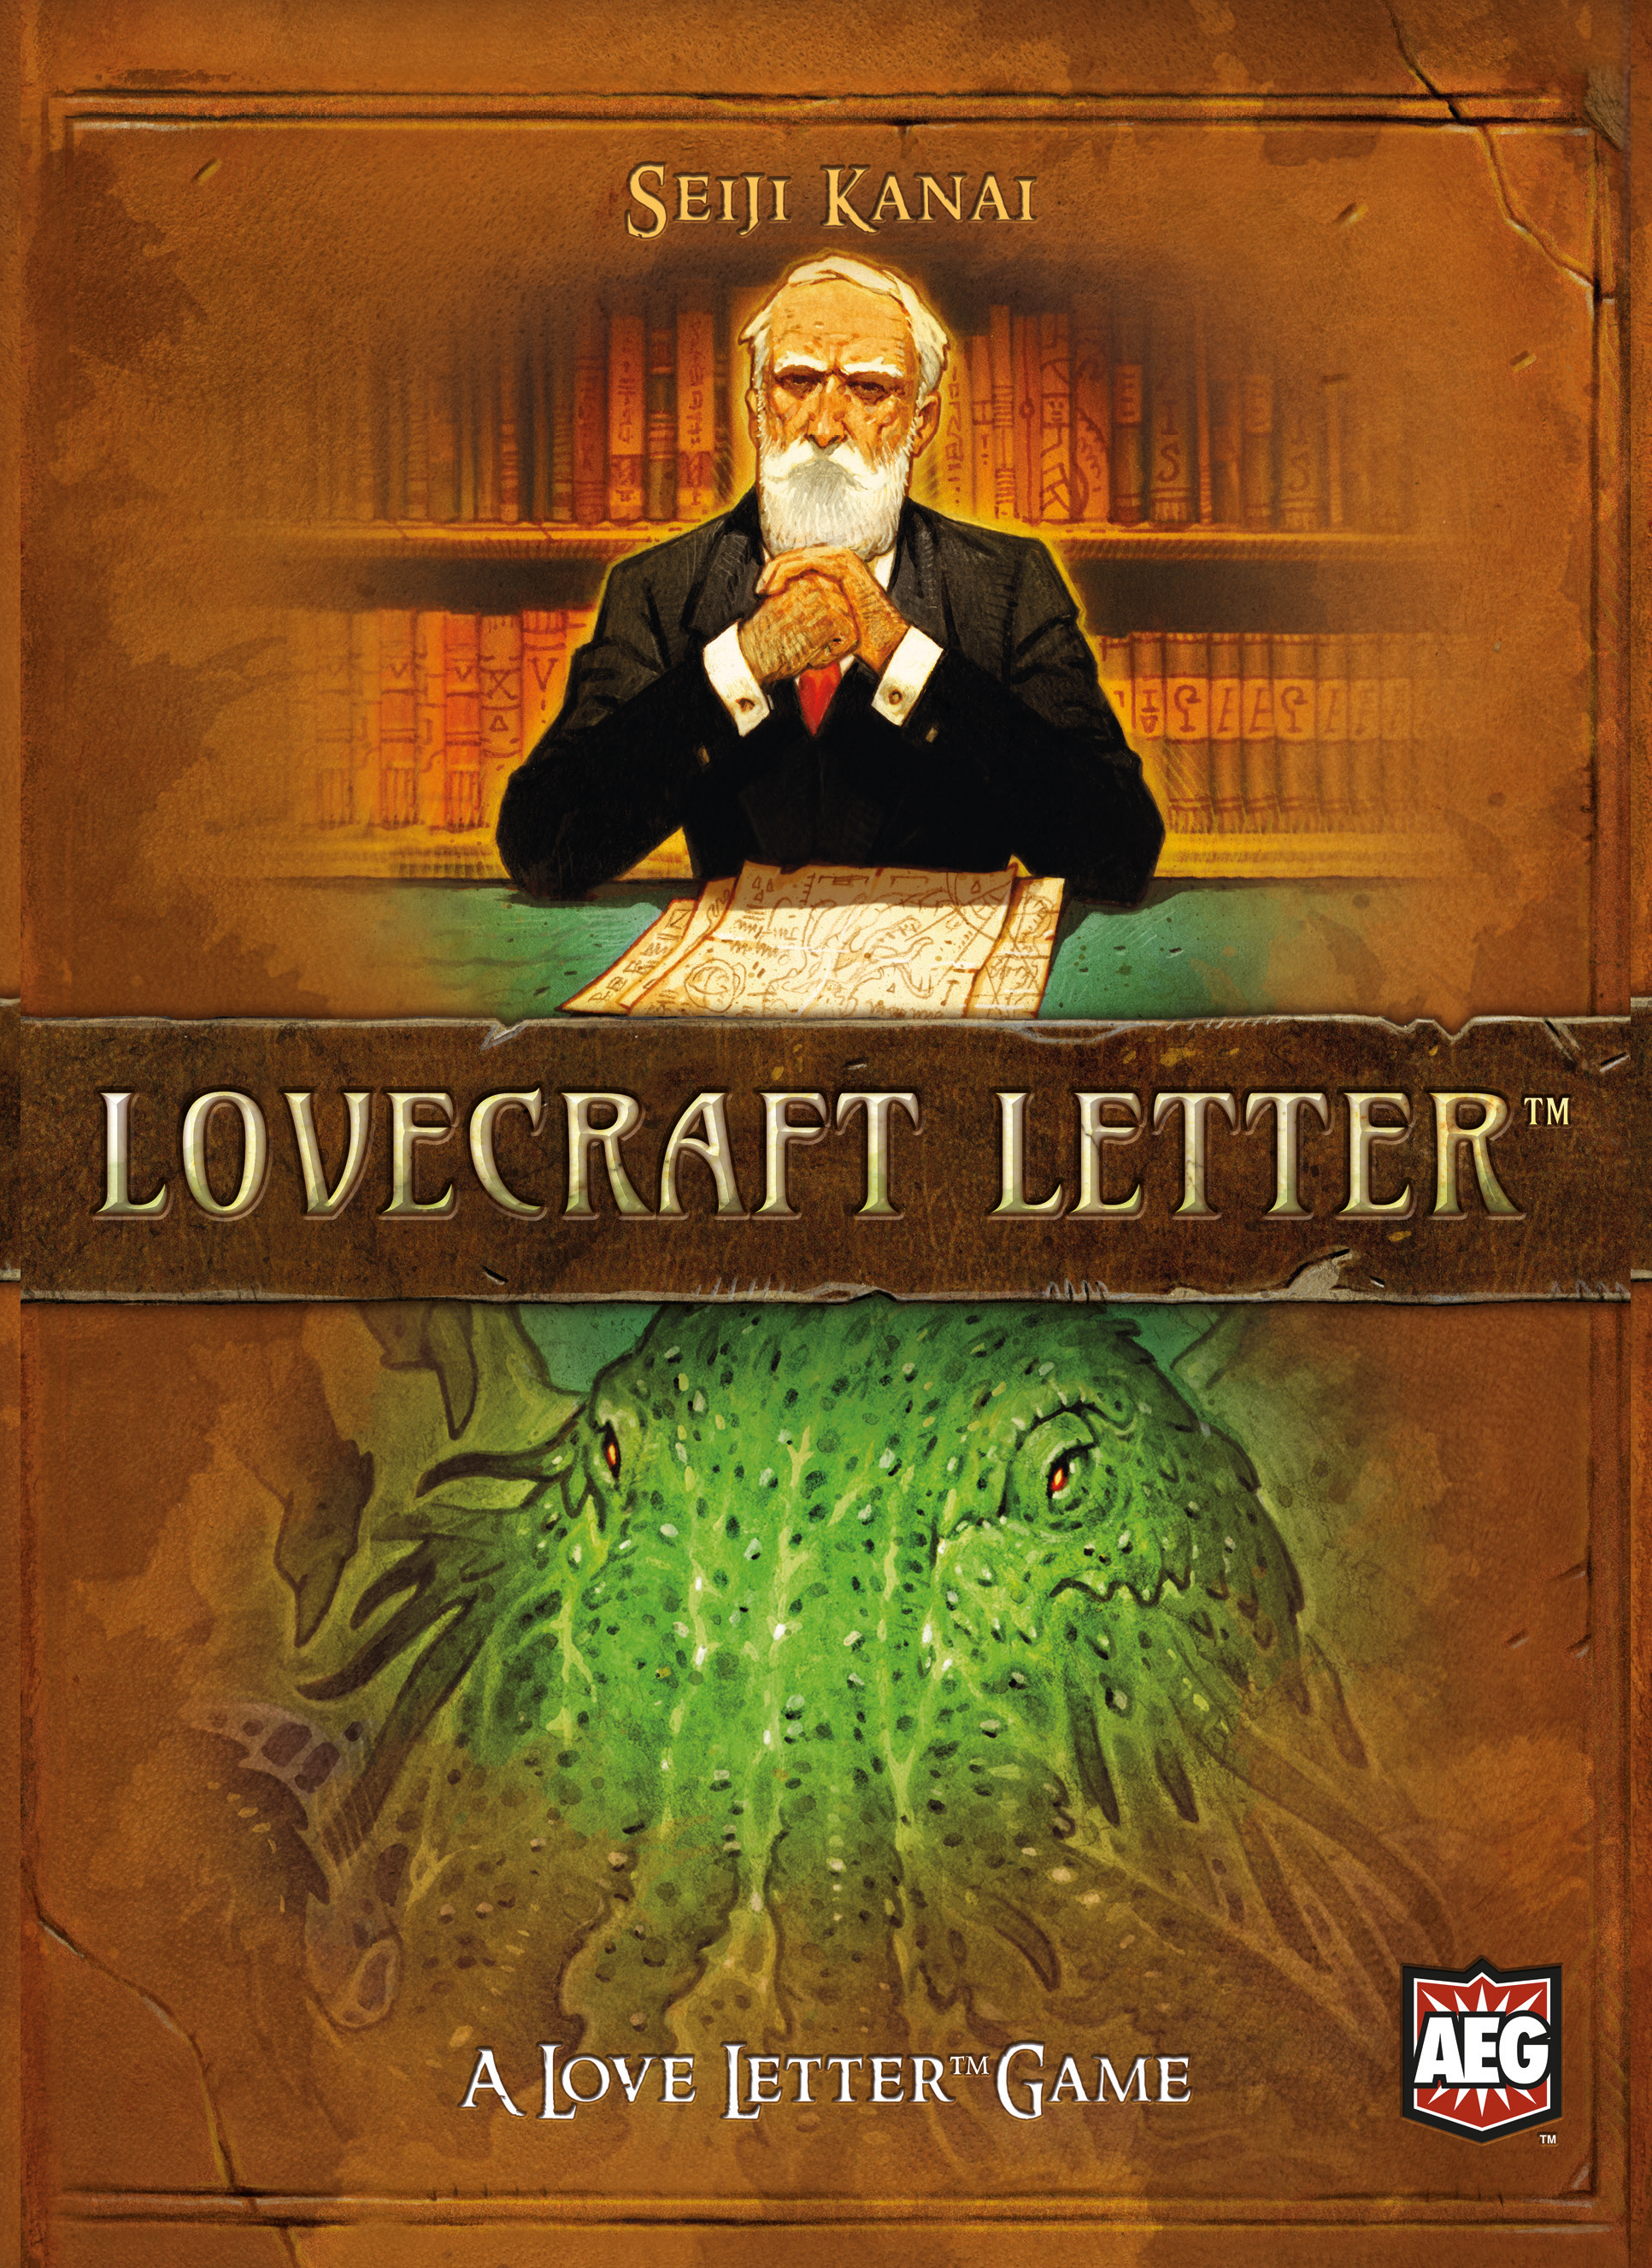 Lovecraft Letter, les illustrations